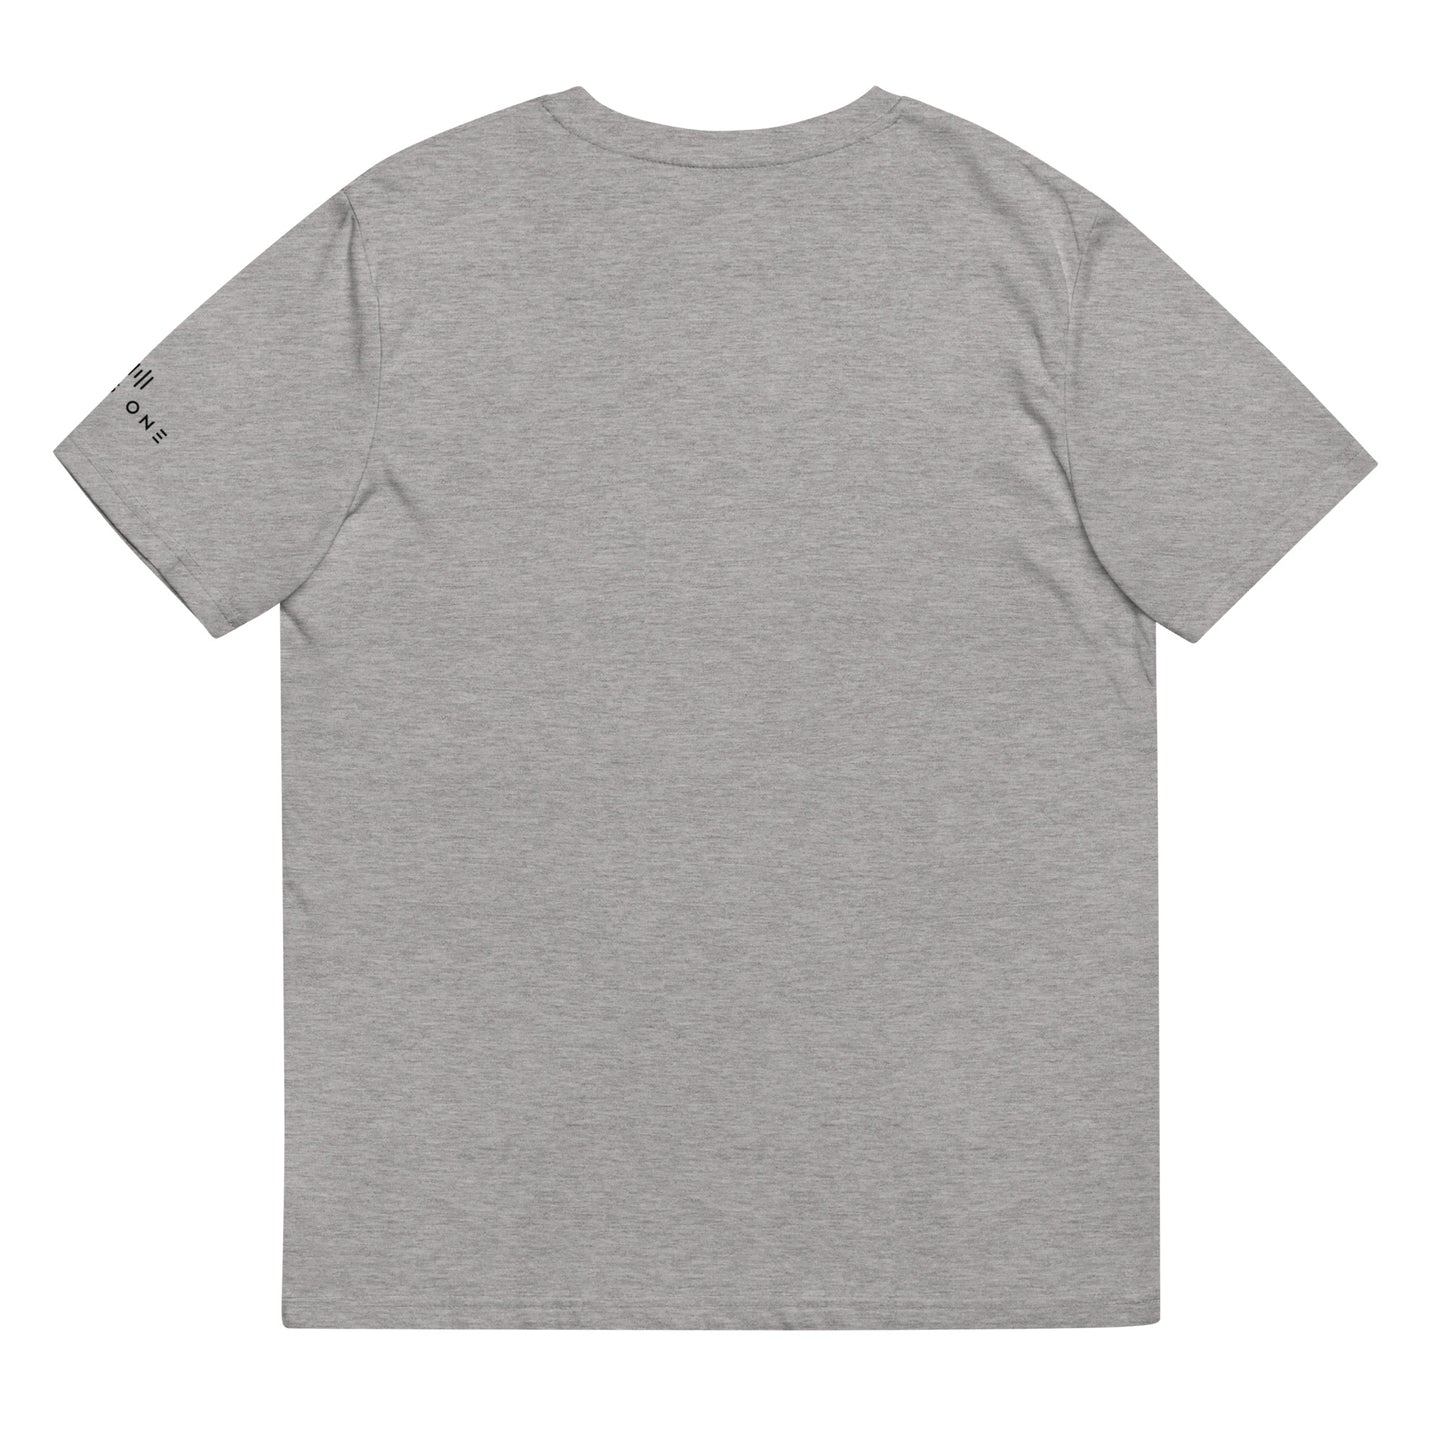 SK8 (v3) Unisex organic cotton t-shirt